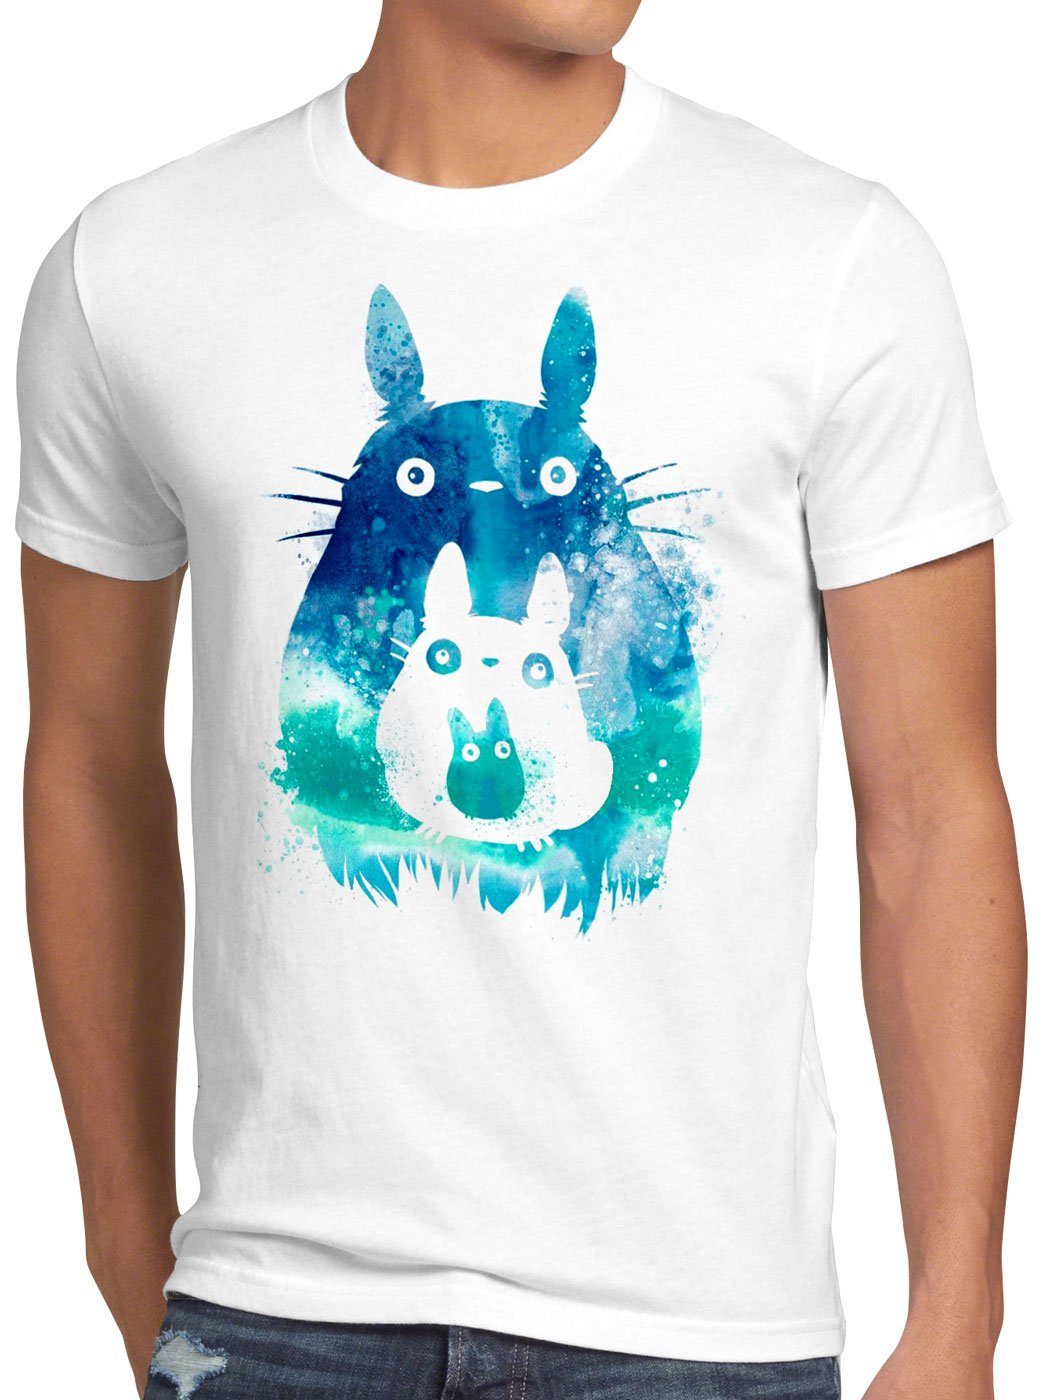 T-Shirt Totoro tonari Wasserfarben anime neko no Print-Shirt Herren mein style3 nachbar